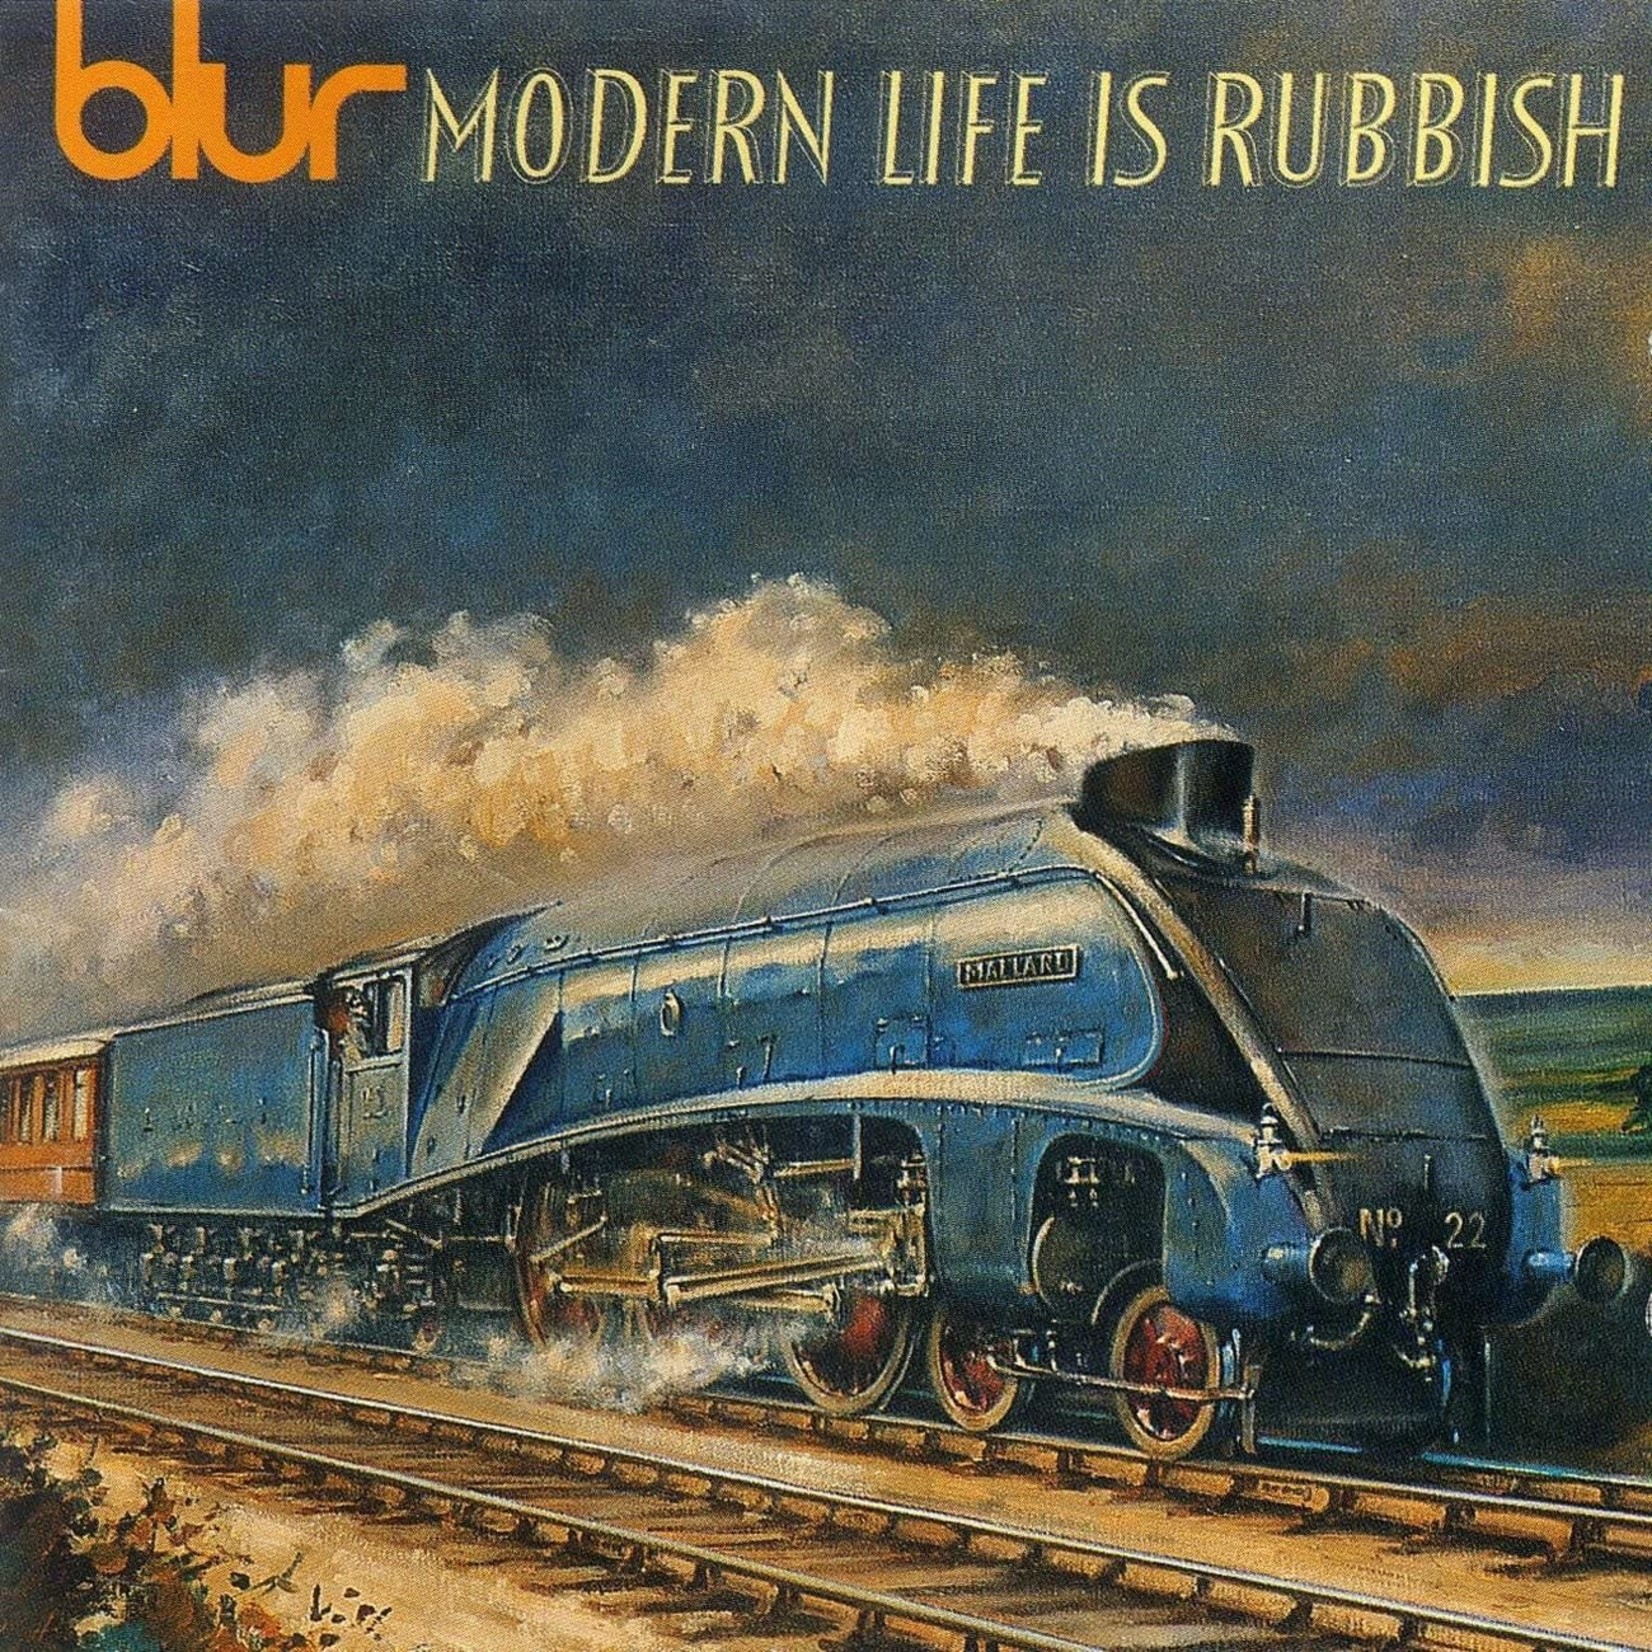 Blur - Modern Life Is Rubbish [2LP]